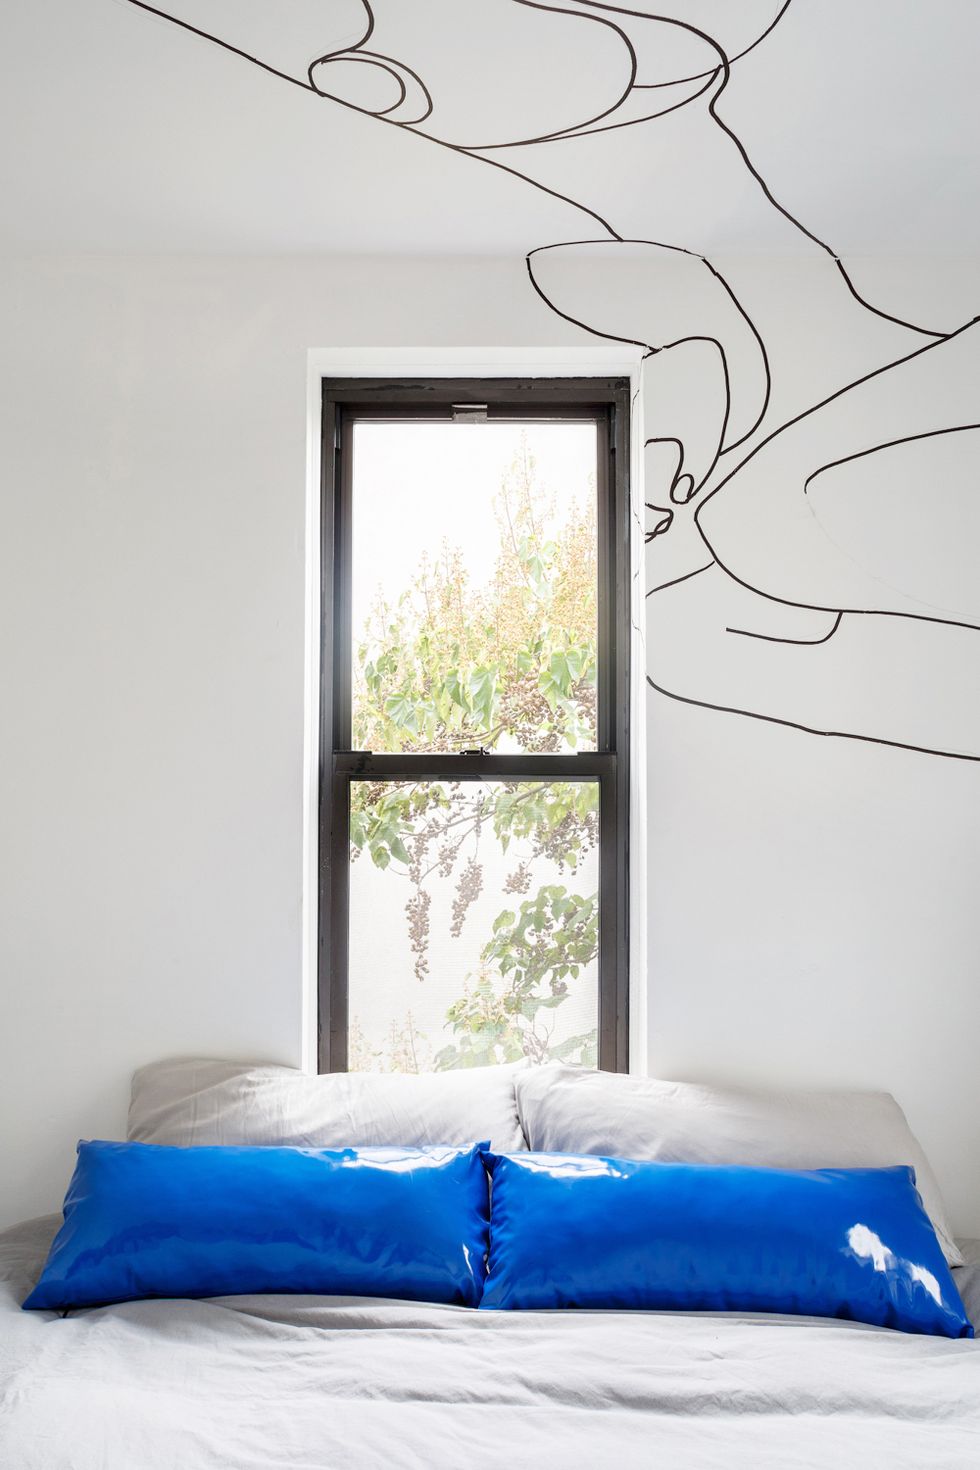 DIY Wall Art  Bedroom wall designs, Walls room, Cute bedroom decor